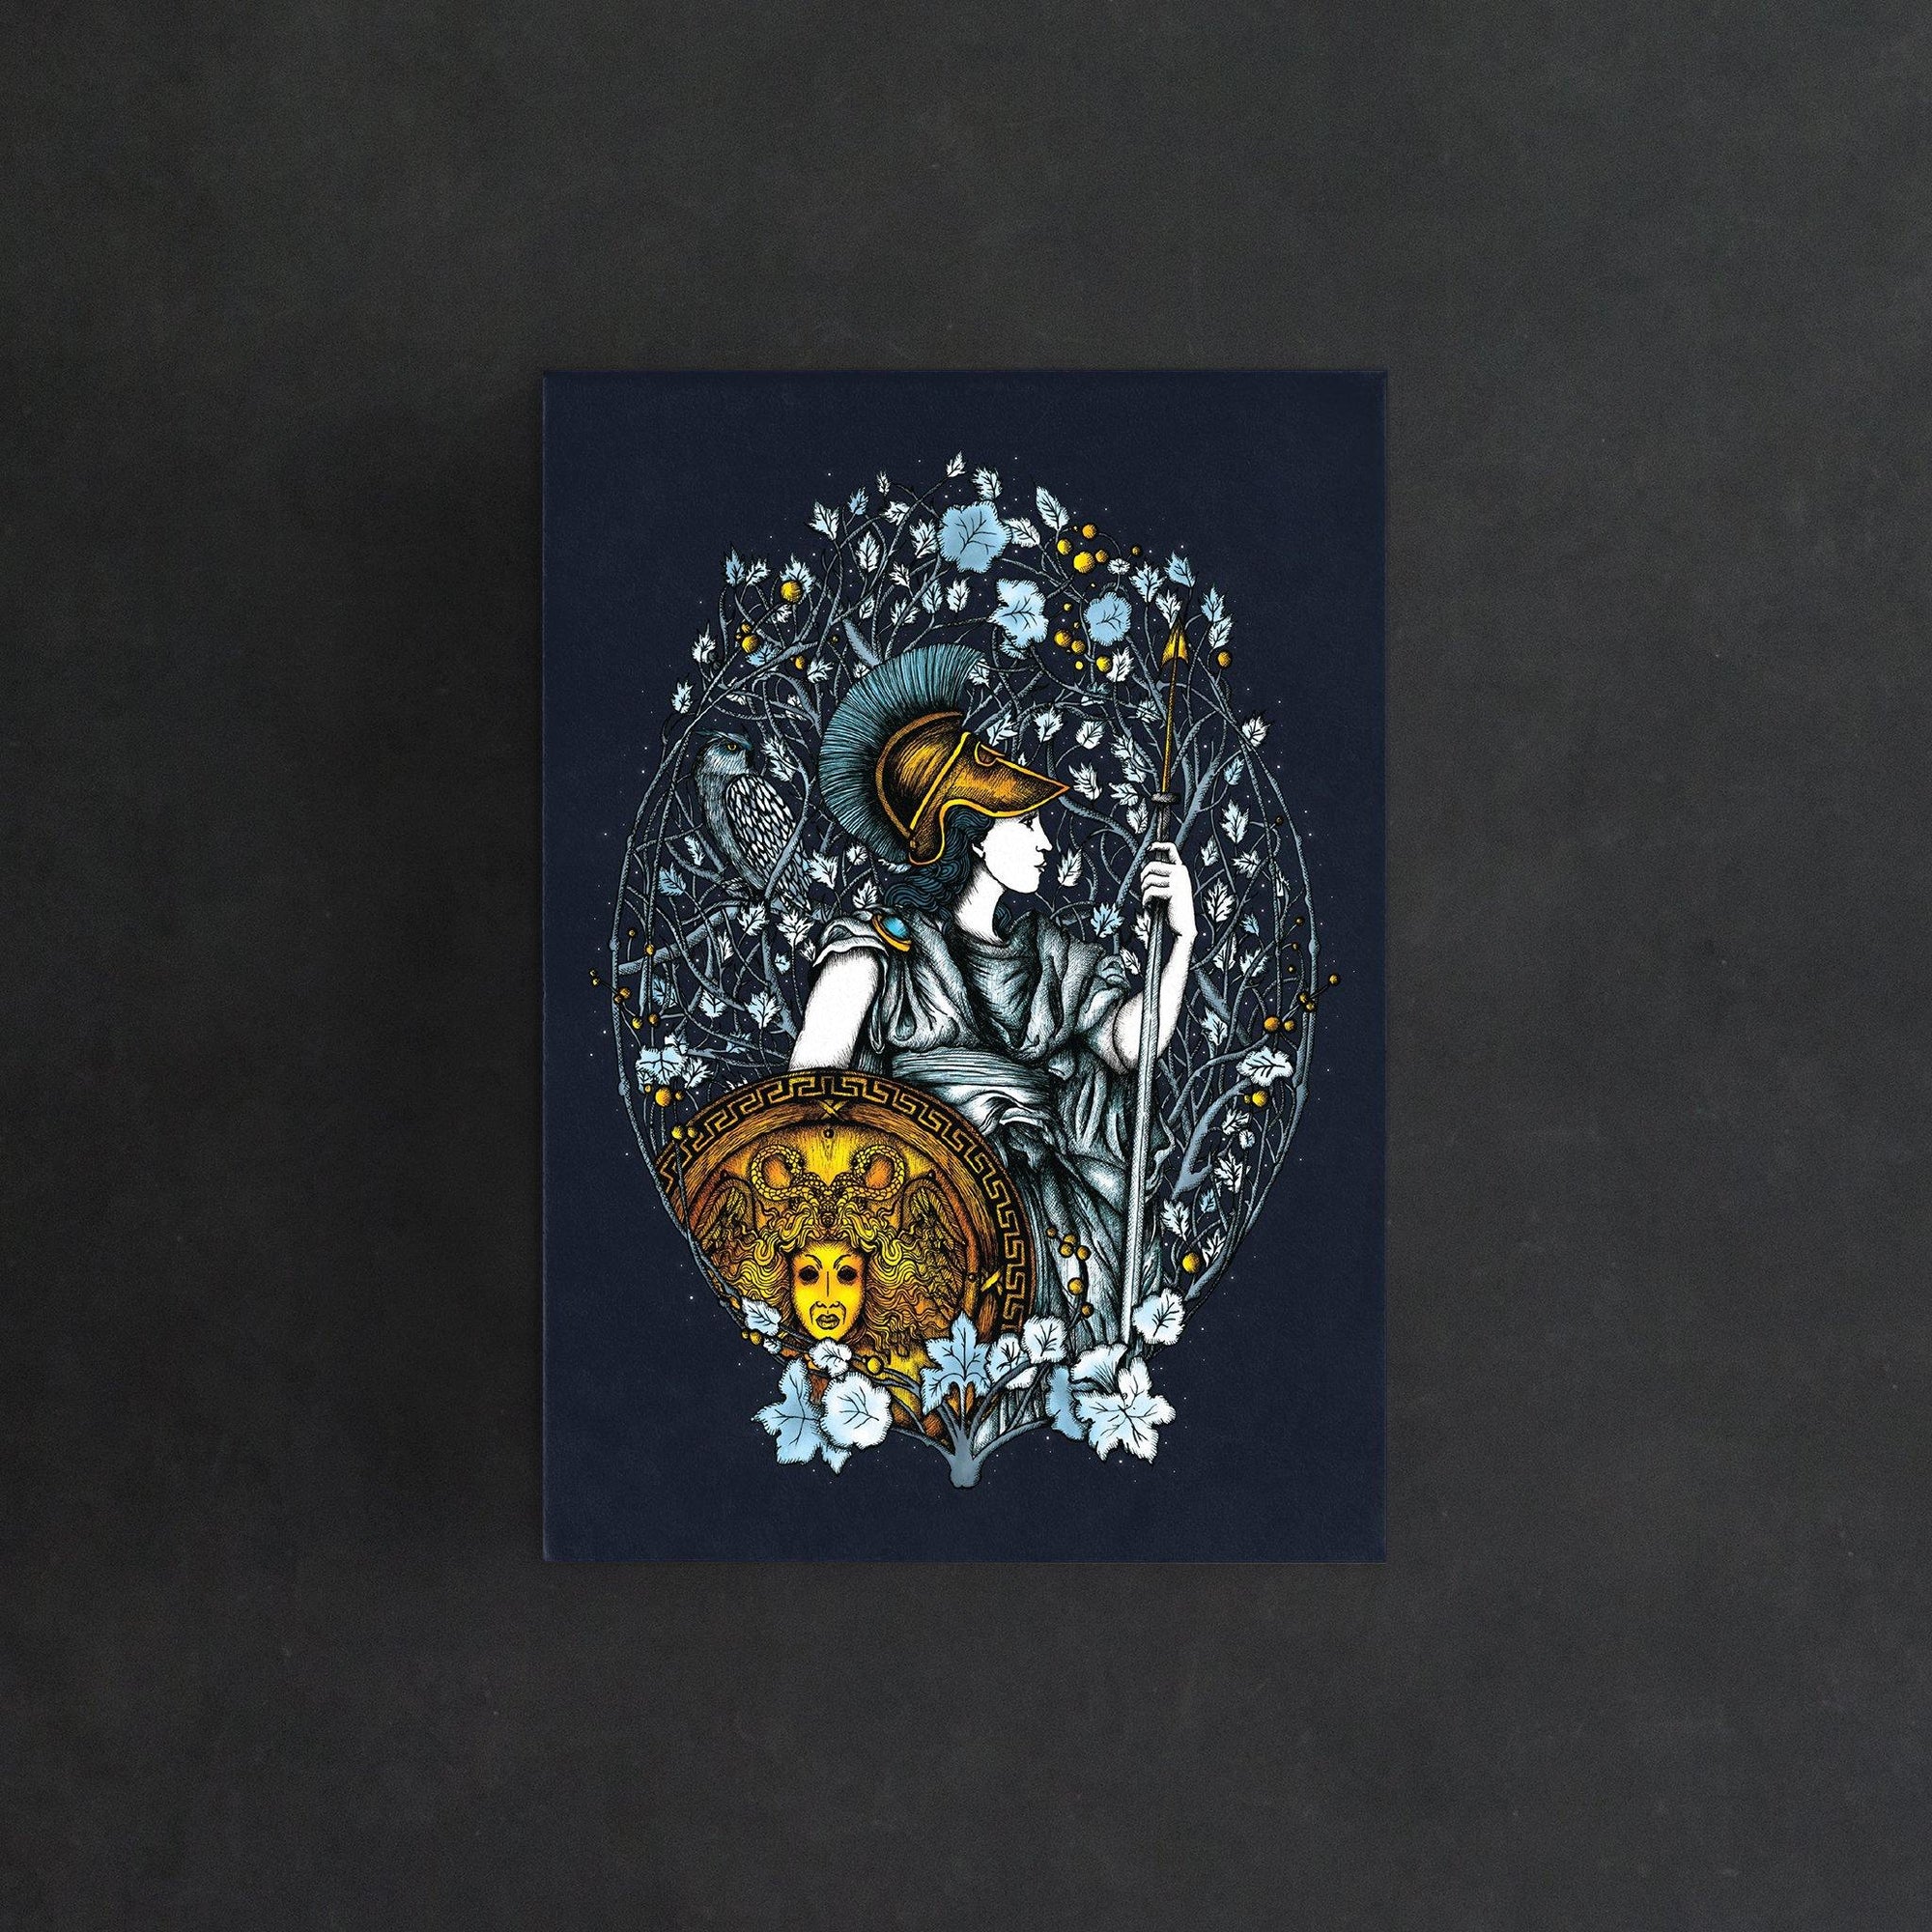 Goddess Athena - Postcard Mini Print - Print is Dead